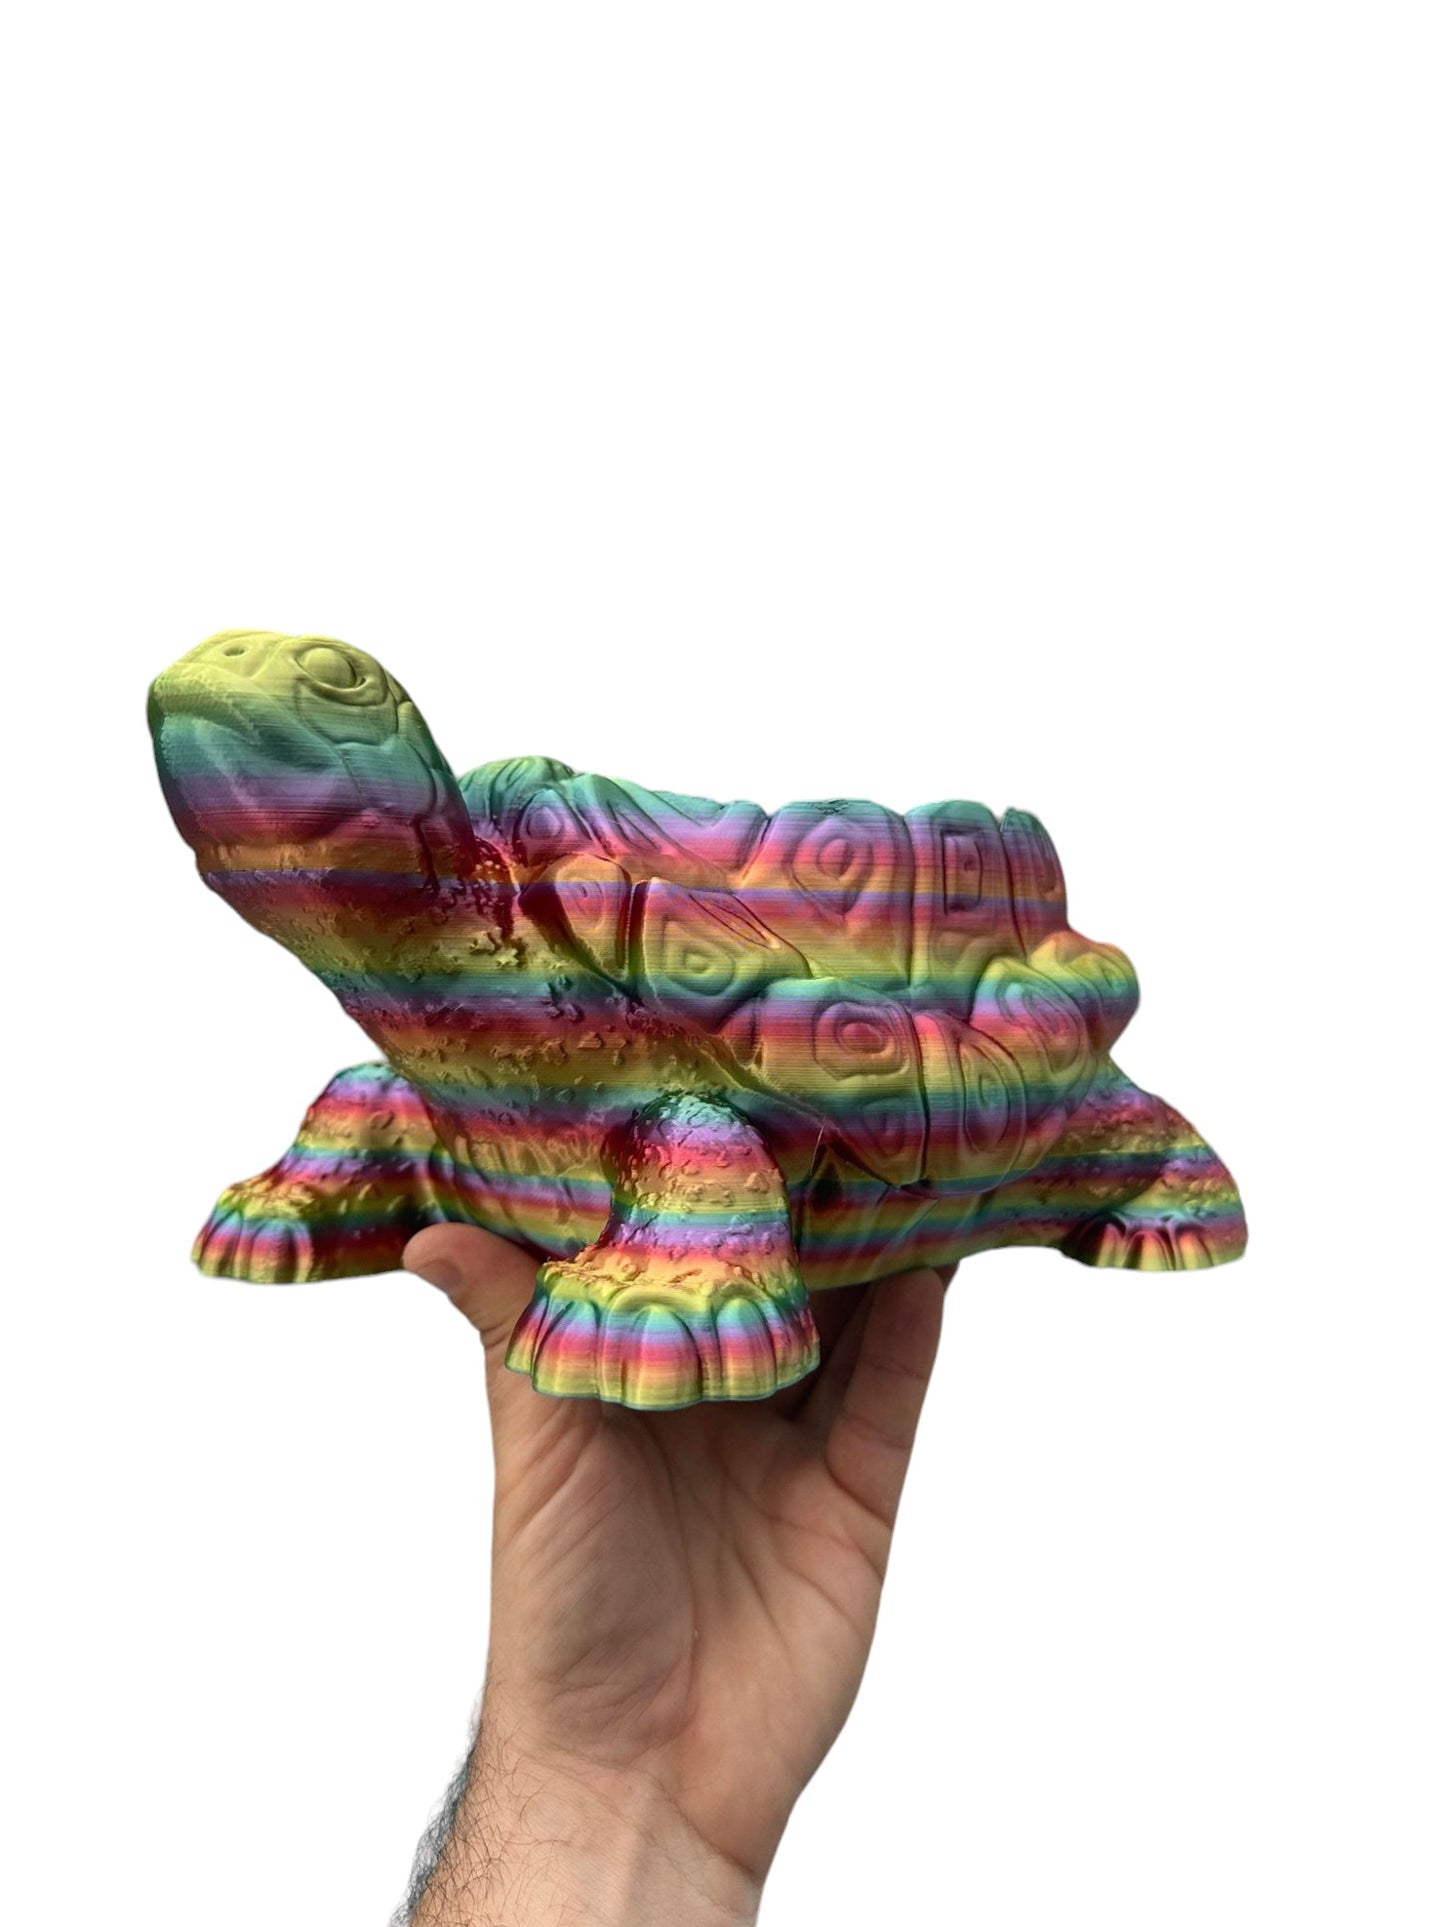 3D Printed Tortoise Planter